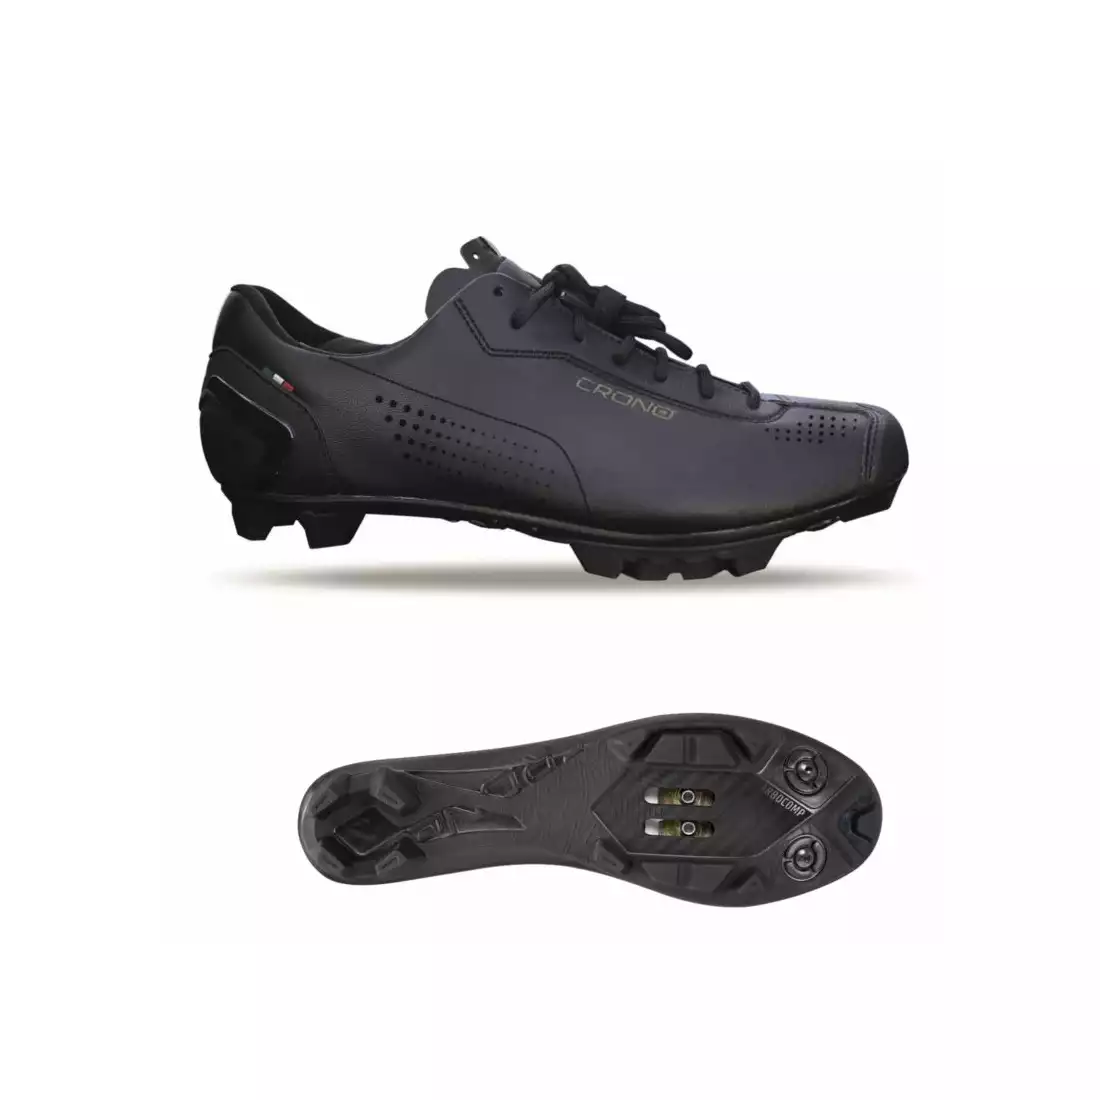 CRONO CG-1-21 MTB cycling shoes, composite, black